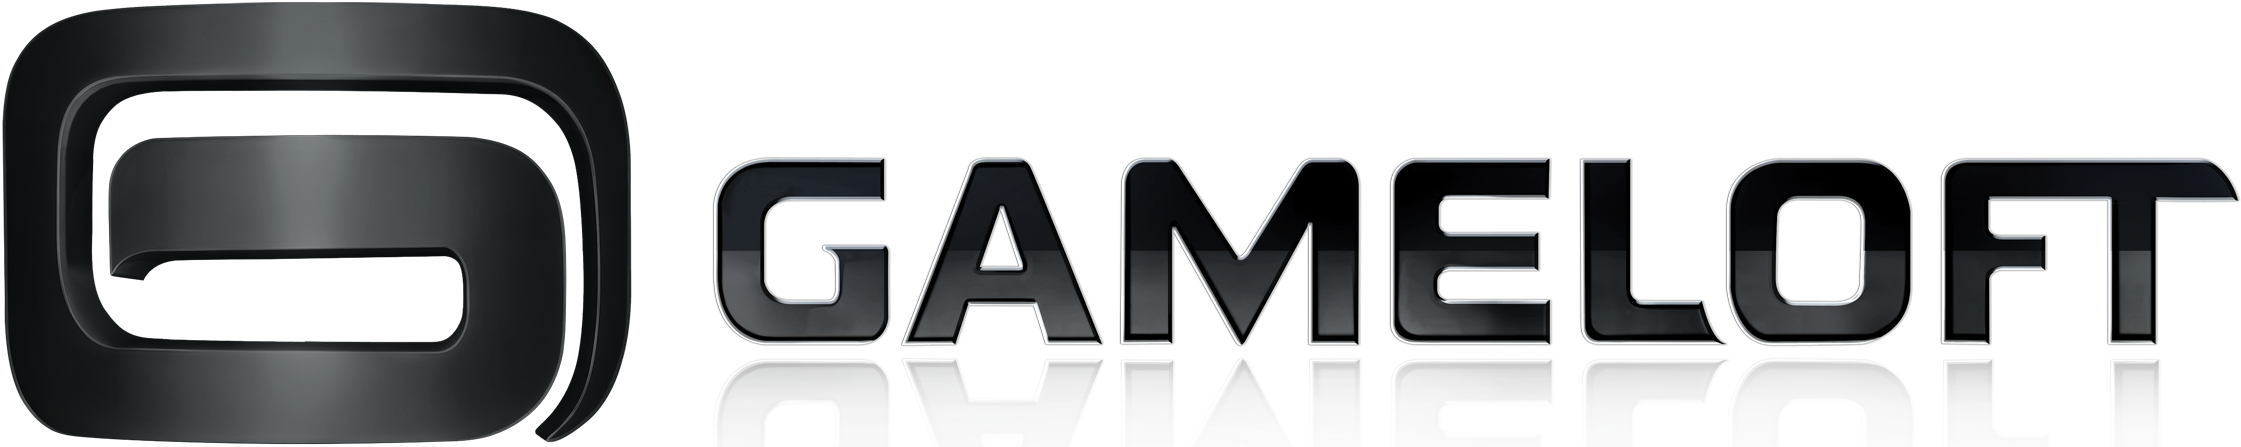 Gameloft-logo-and-wordmark-2